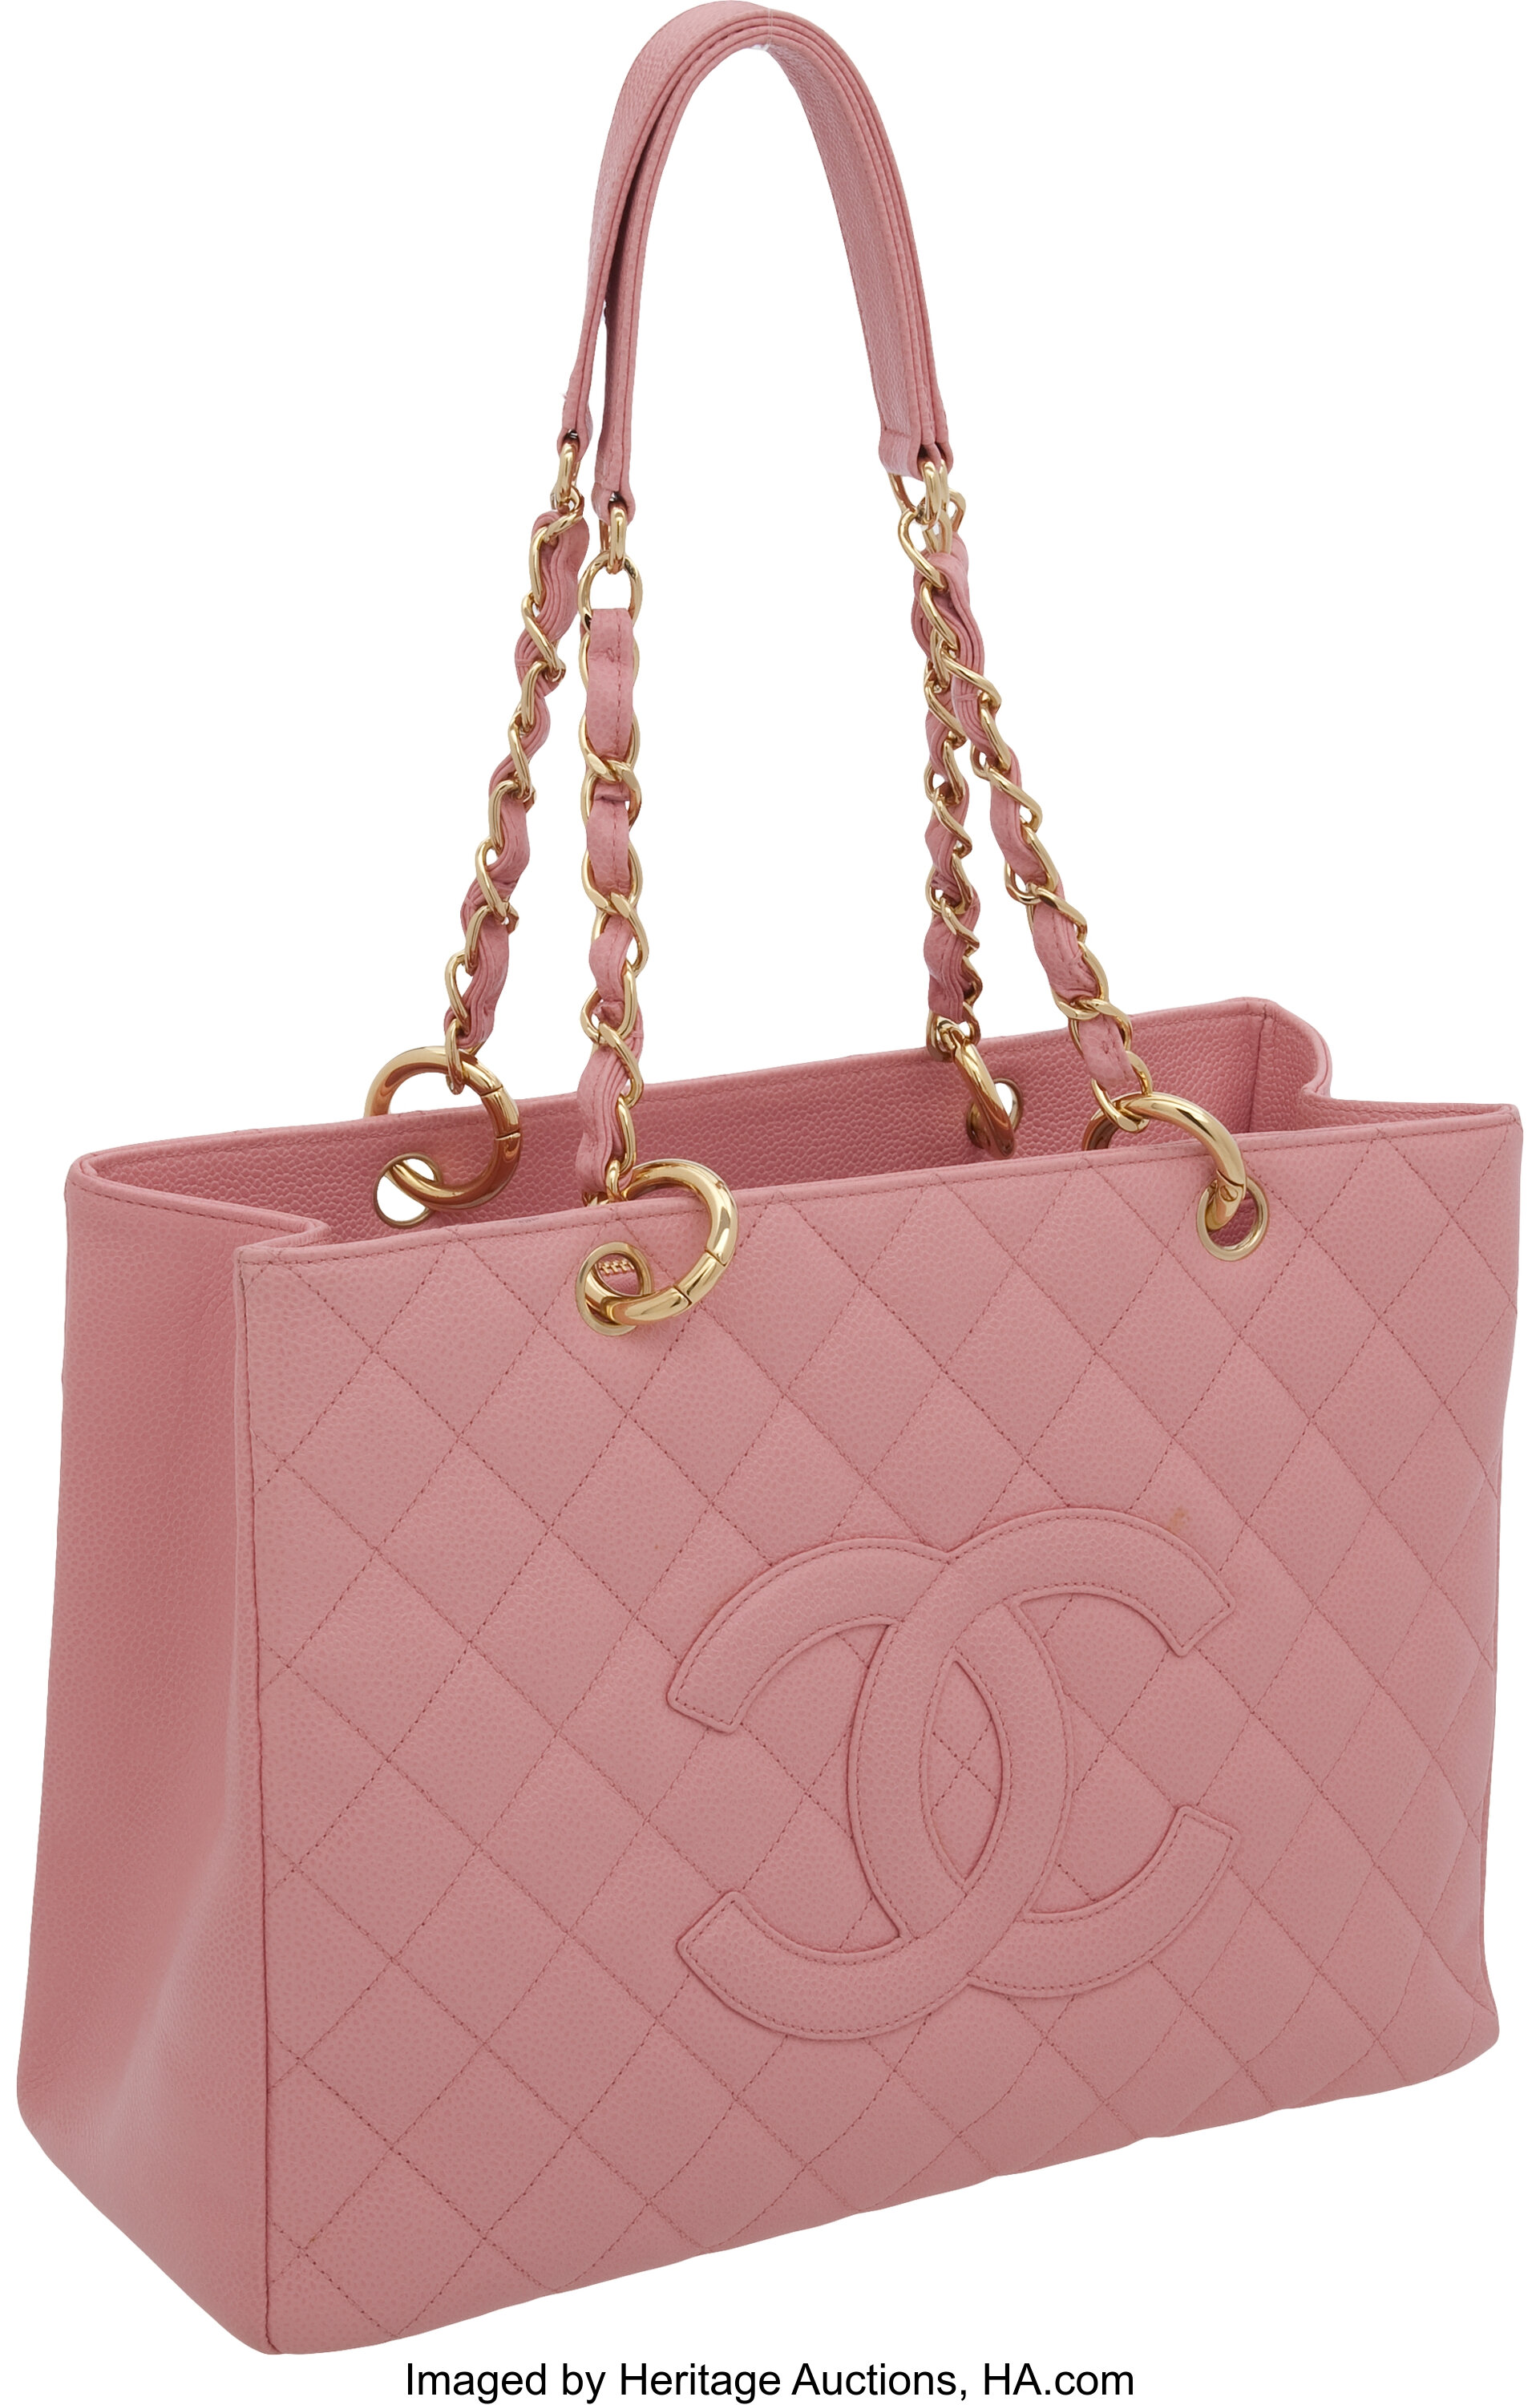 Chanel Pink Caviar Leather Classic Grand Shopper Tote Bag, 13 x 9